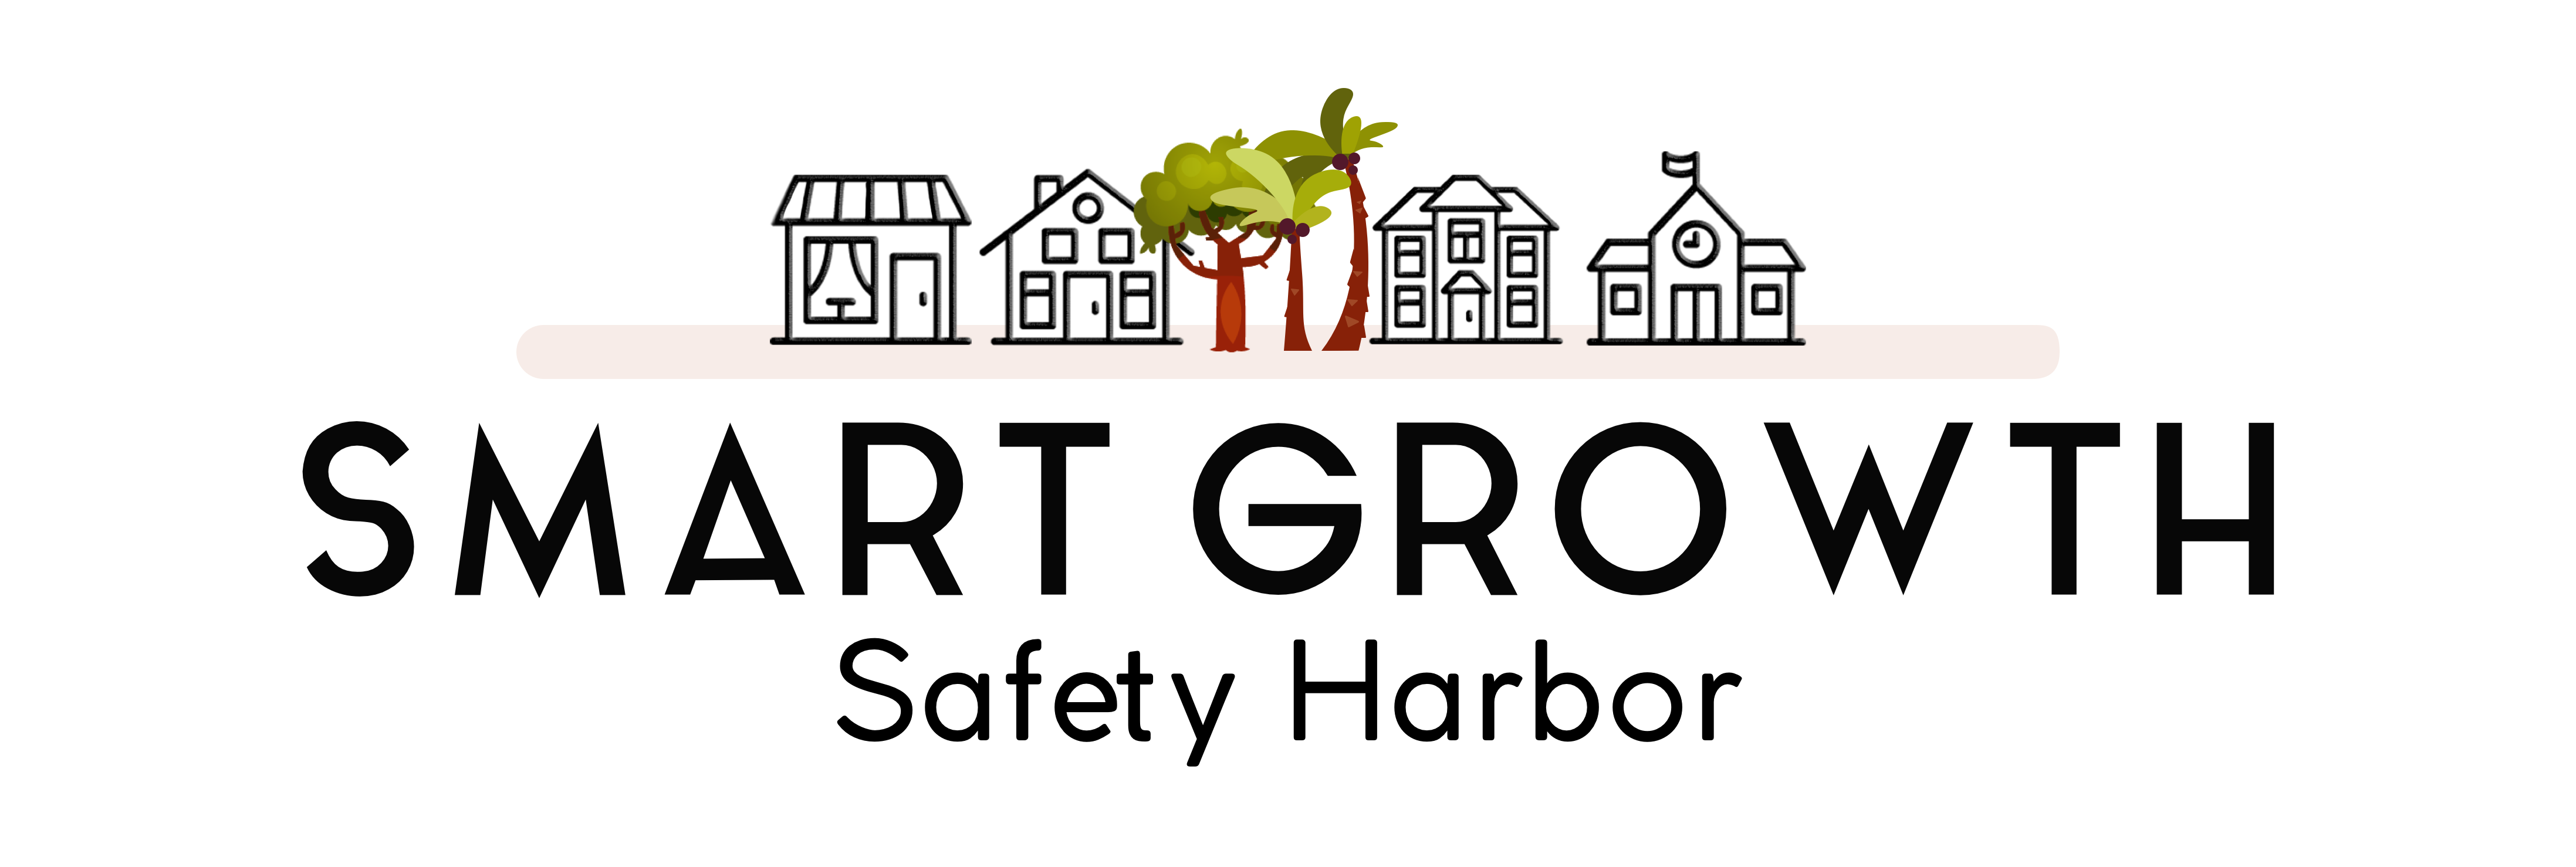 Smart Growth Safety Harbor logo